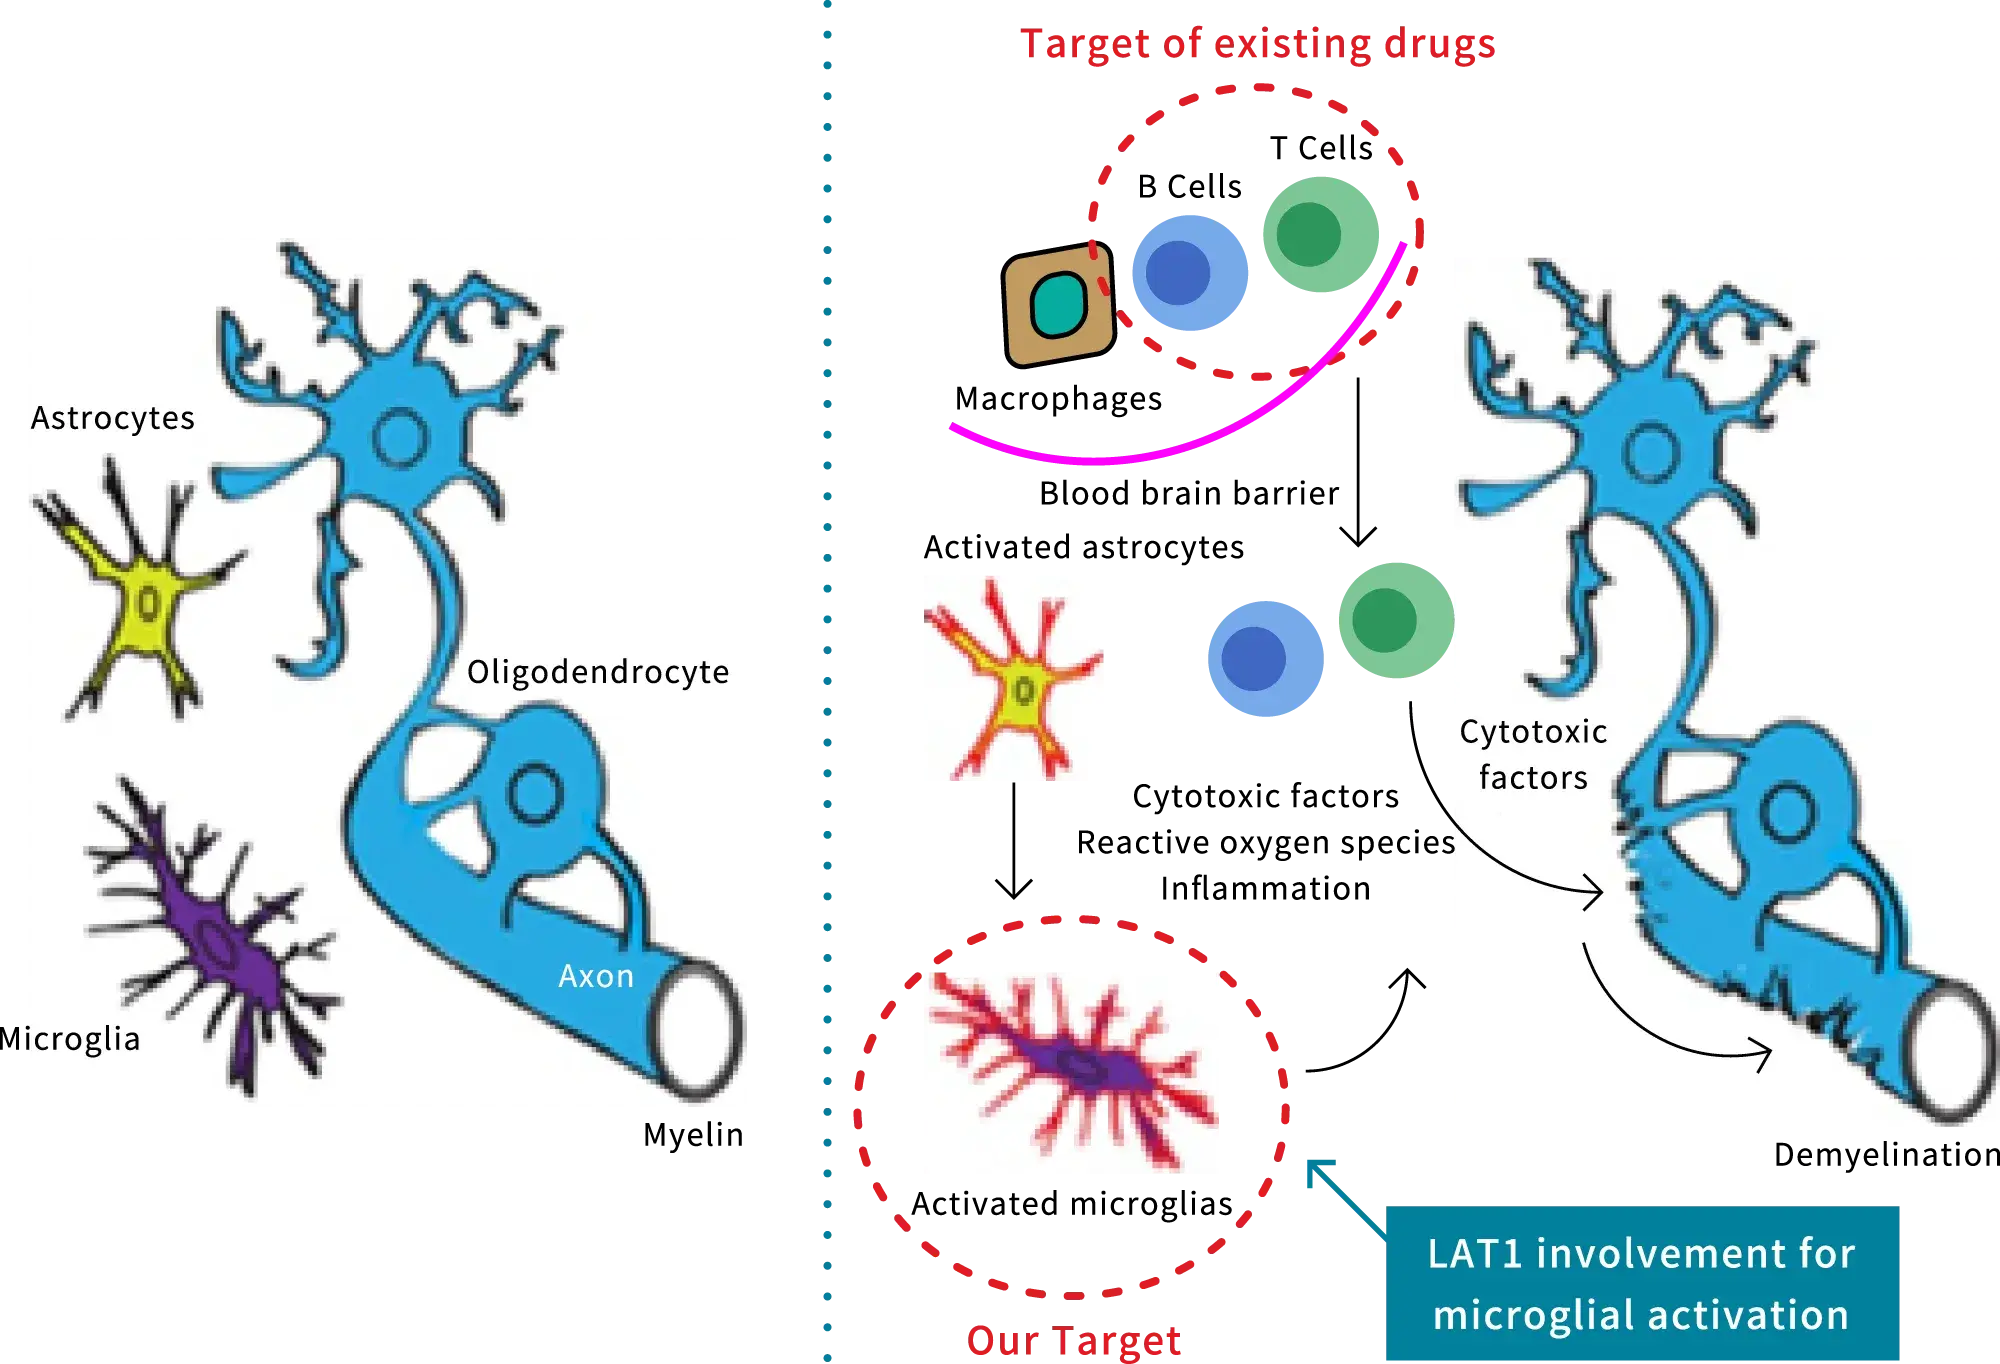 Basic mechanism of MS development and drug targets